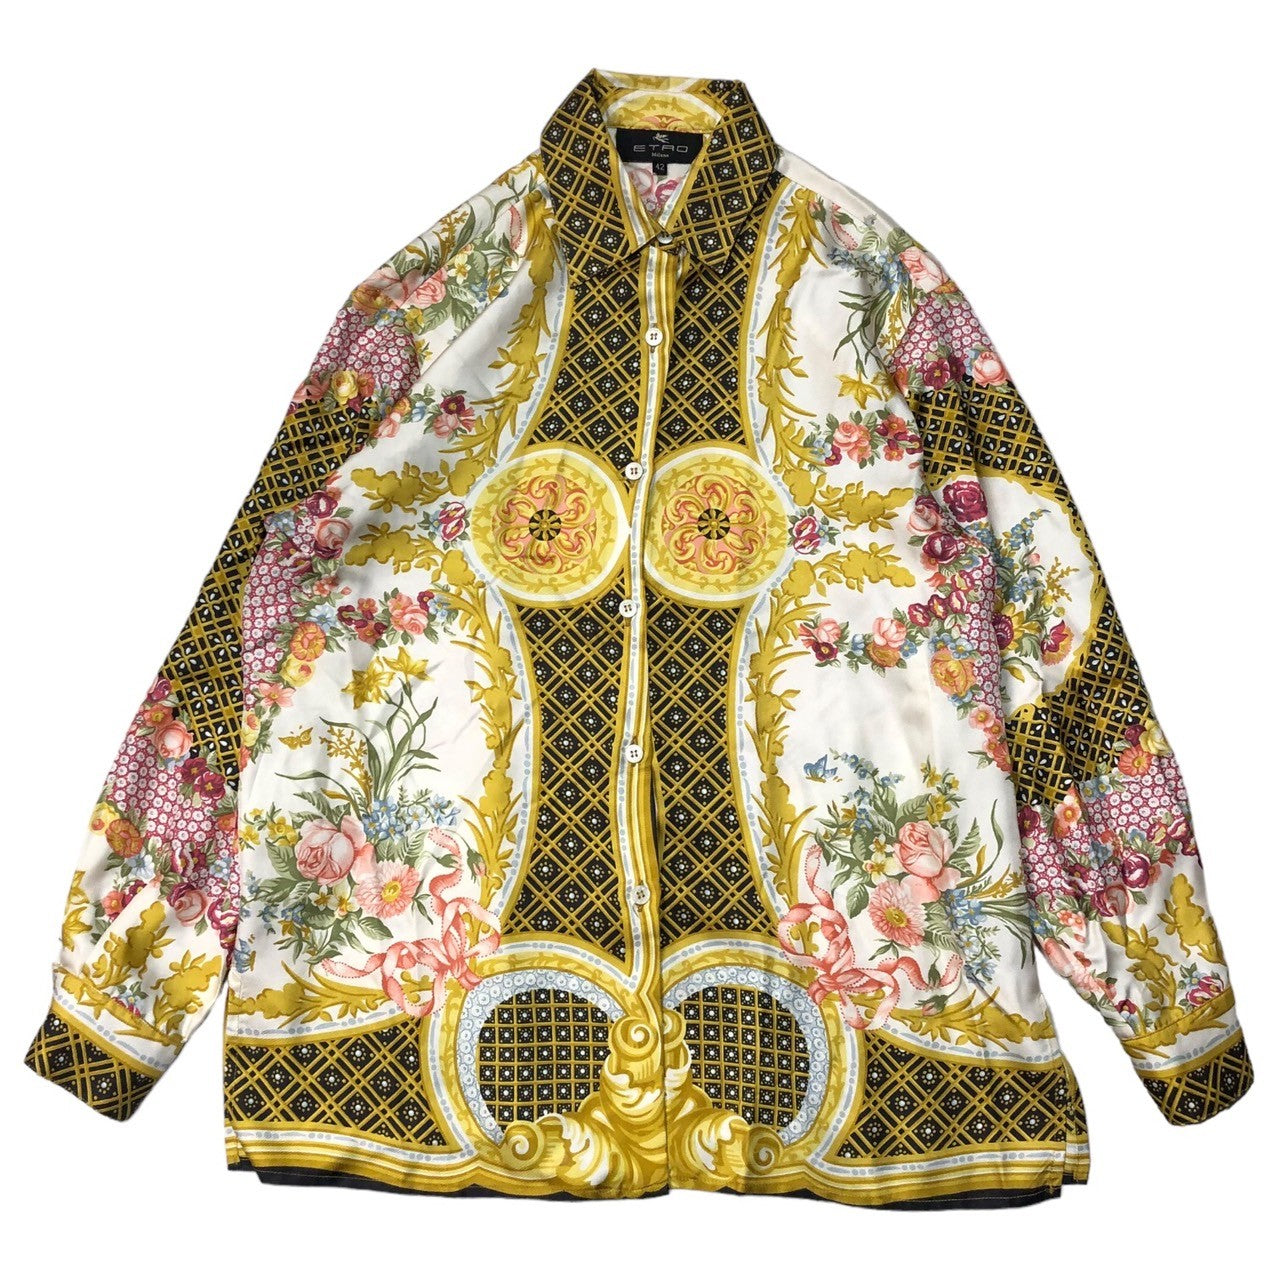 ETRO(エトロ) Scarf pattern all silk shirt スカーフ柄 シルク シャツ 53-12546-9012 42(XL程度) ゴールド×ホワイト